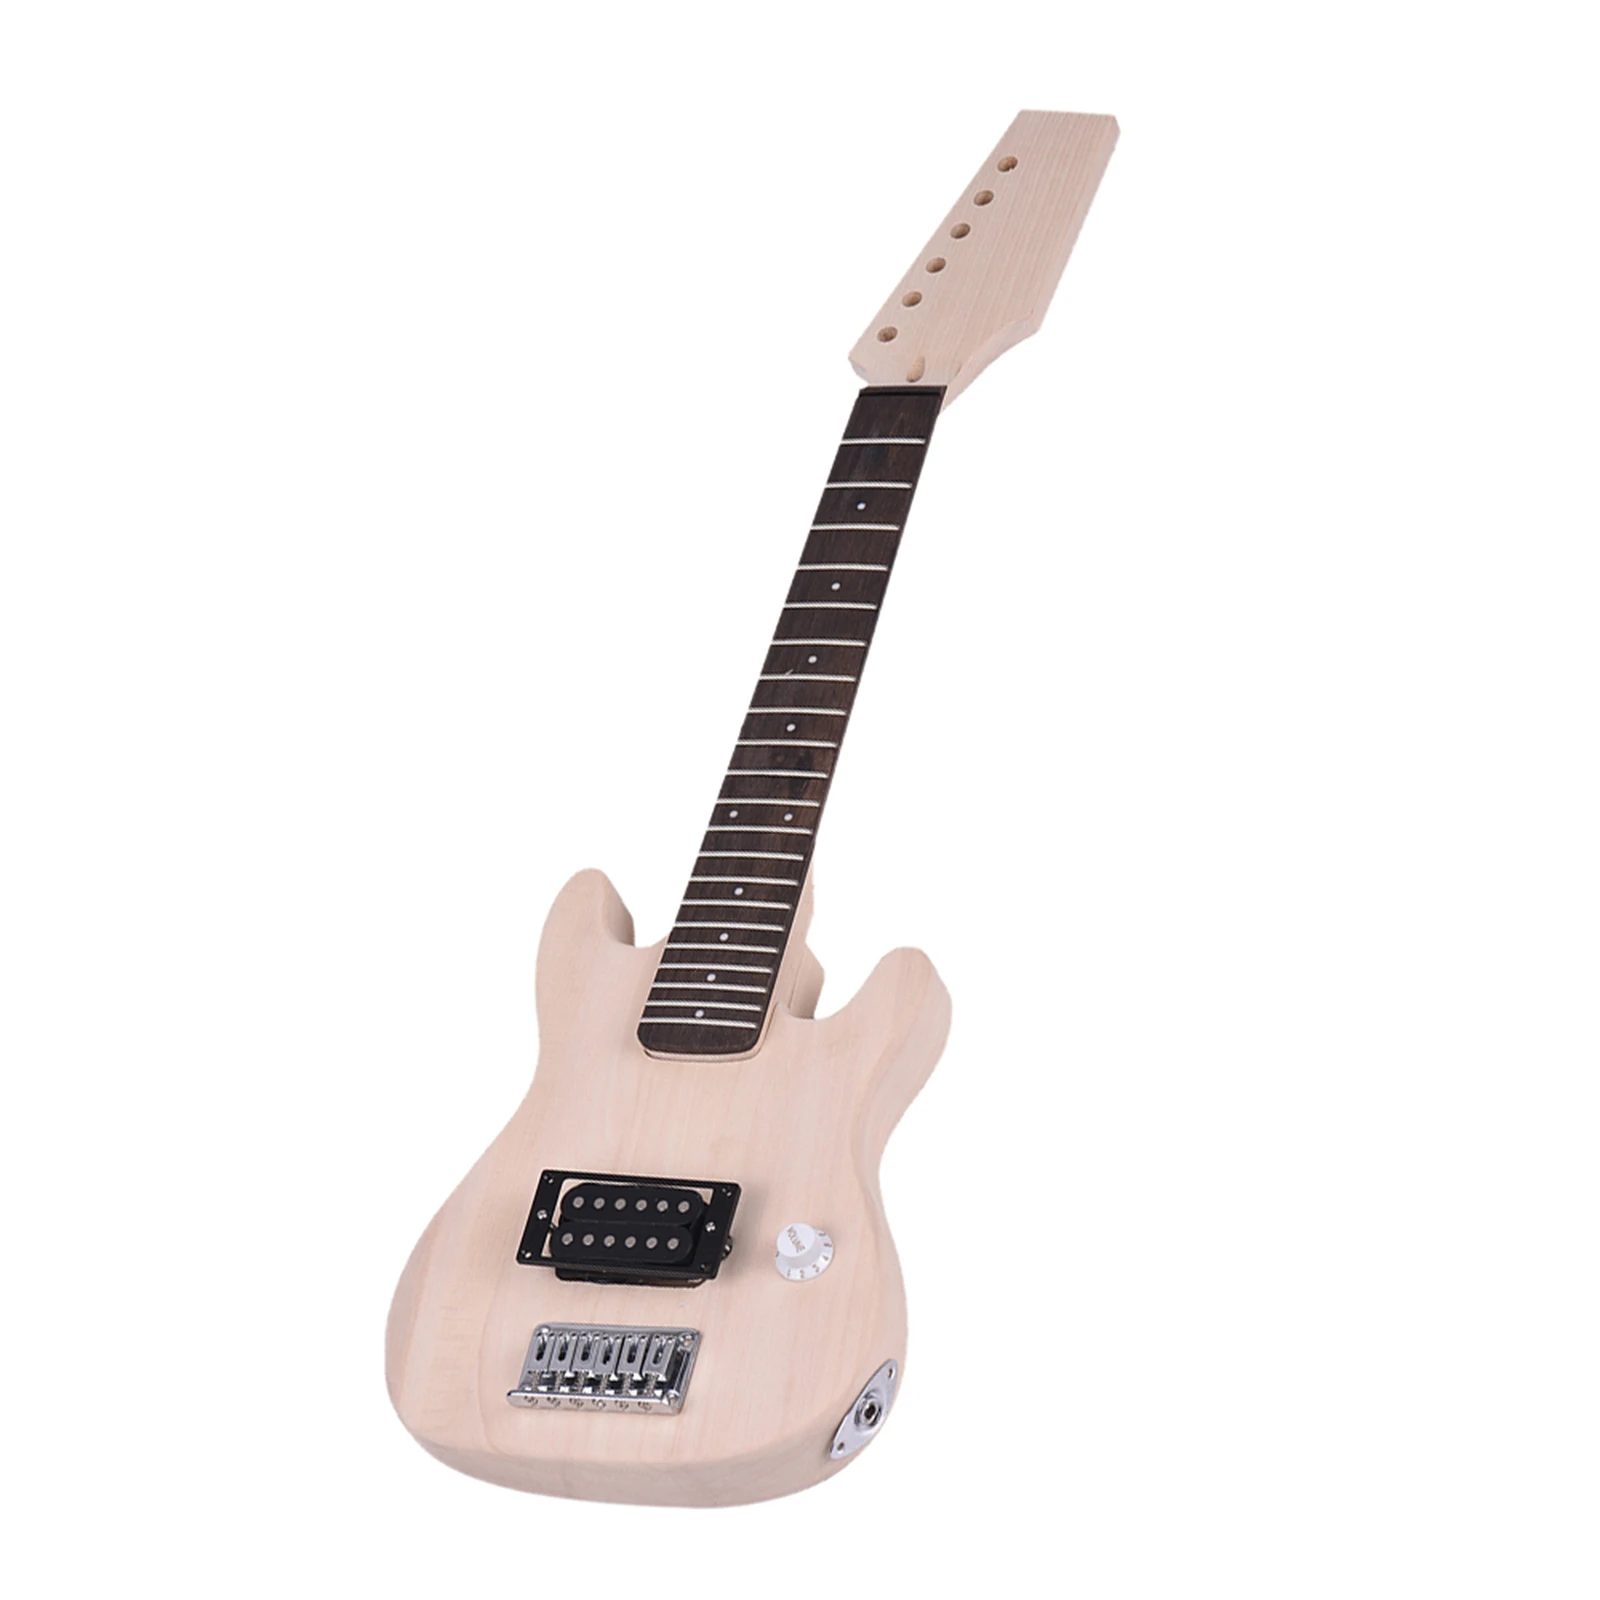 1Set DIY Unfinished Electric Guitar Kits Kits for ST Guitar DIY Parts Guitar Parts Accessories